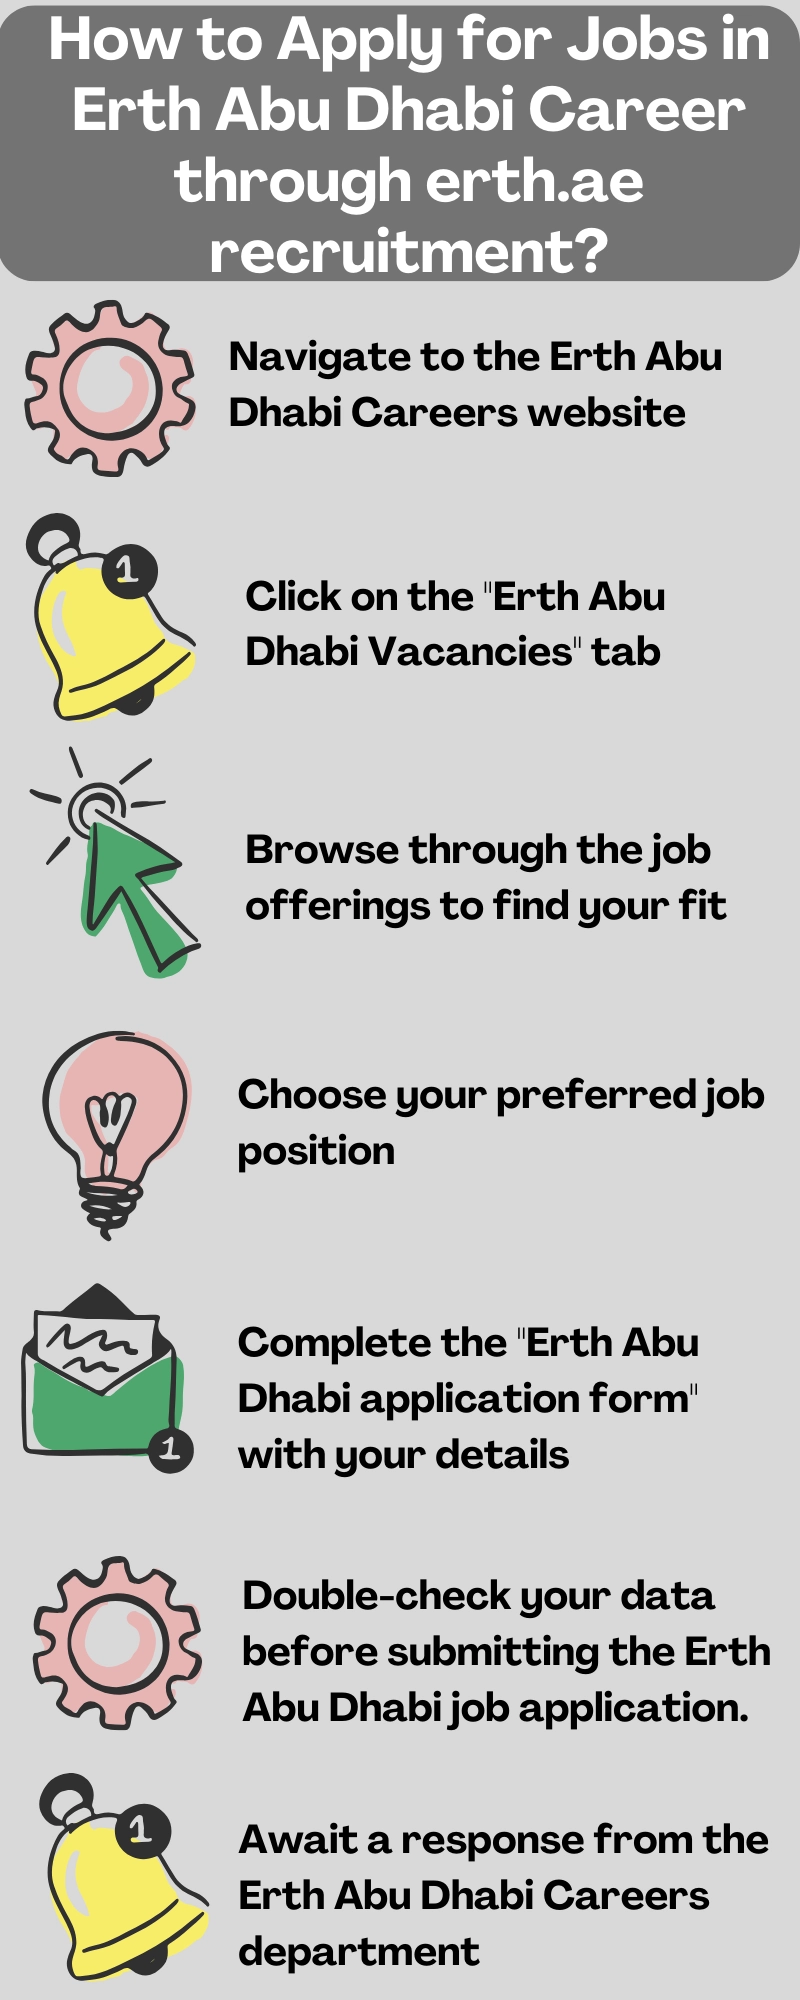 How to Apply for Jobs in Erth Abu Dhabi Career through erth.ae recruitment?